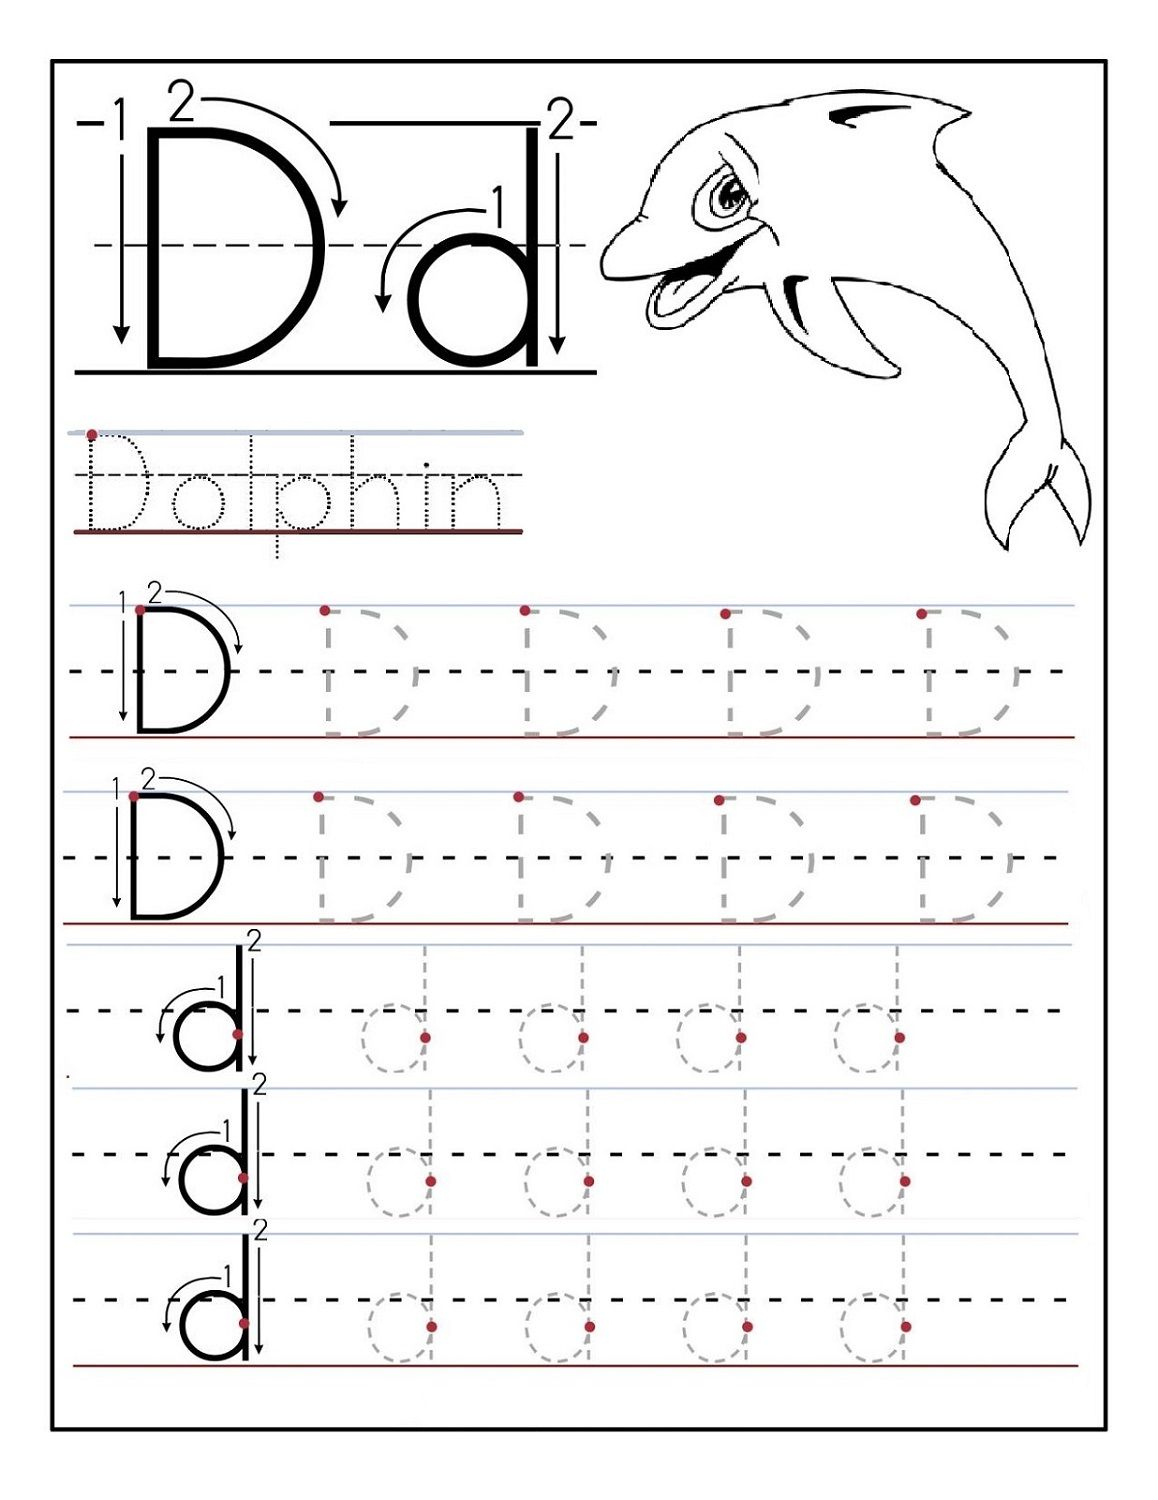 Traceable Letter Worksheets - Kids Learning Activity for Trace Letter D Worksheets Preschool